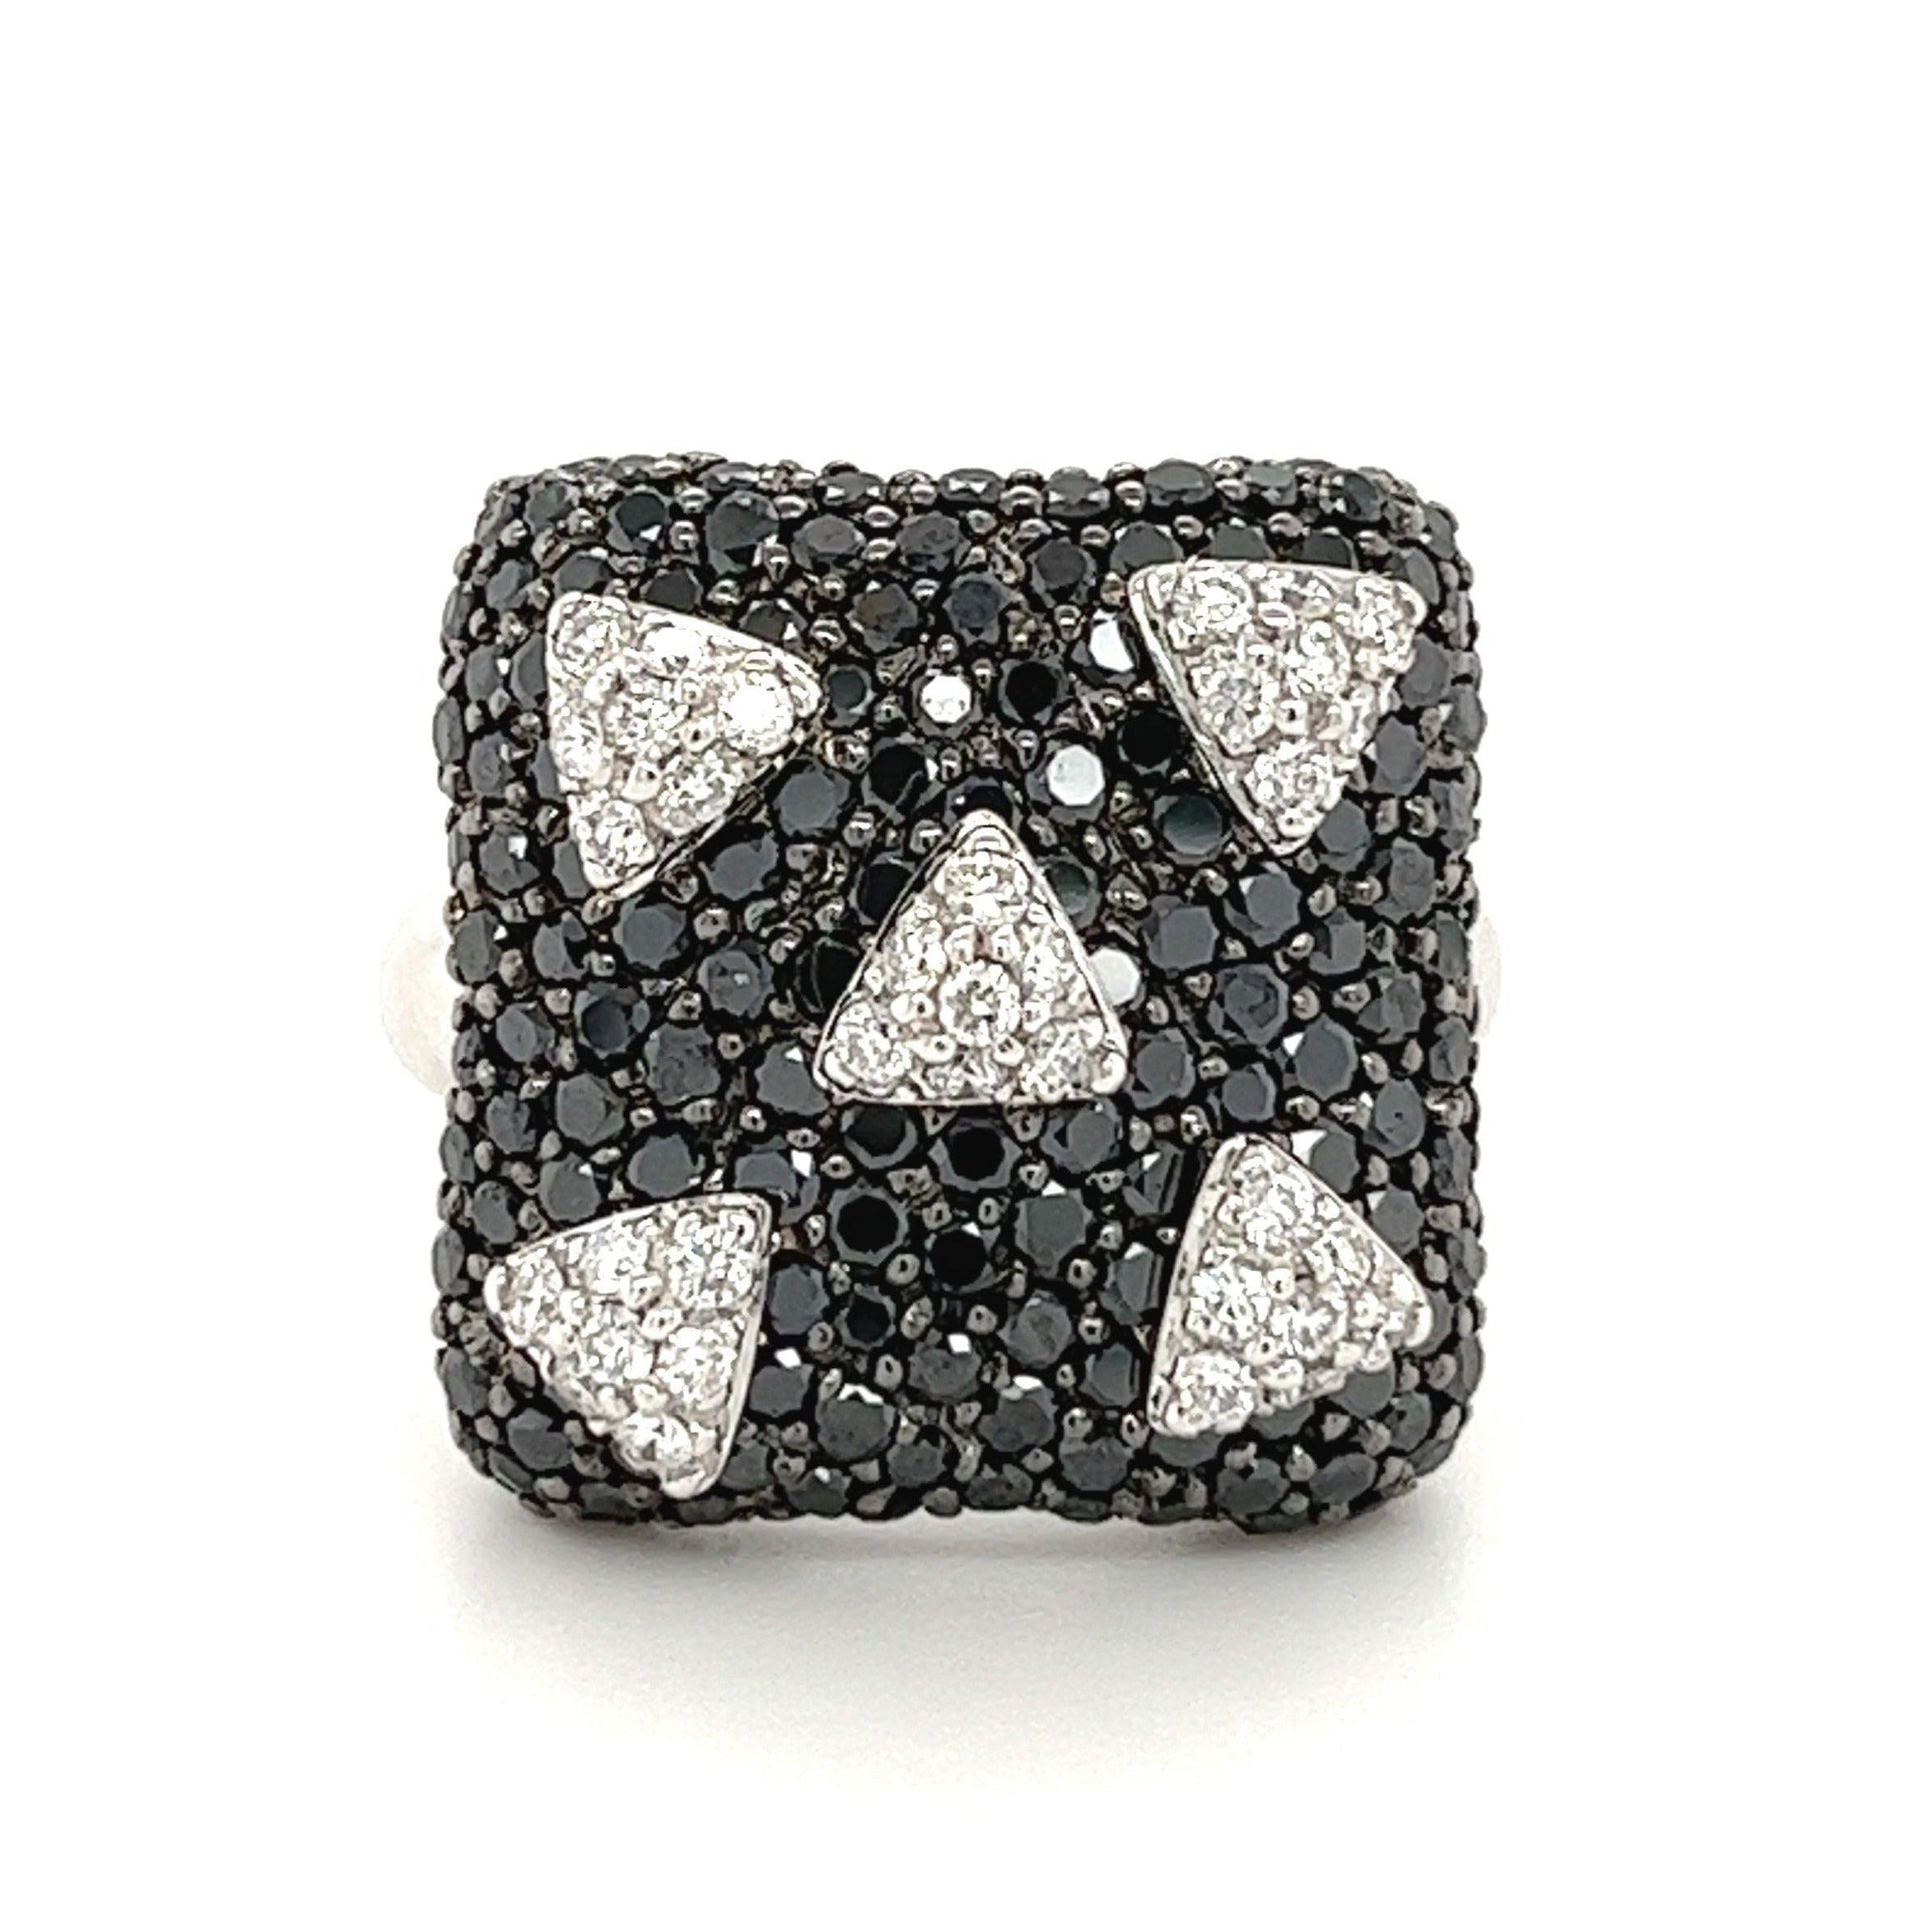 Starlit Night Black and White Diamond Cluster Ring in 18K White Gold-Rings-ASSAY